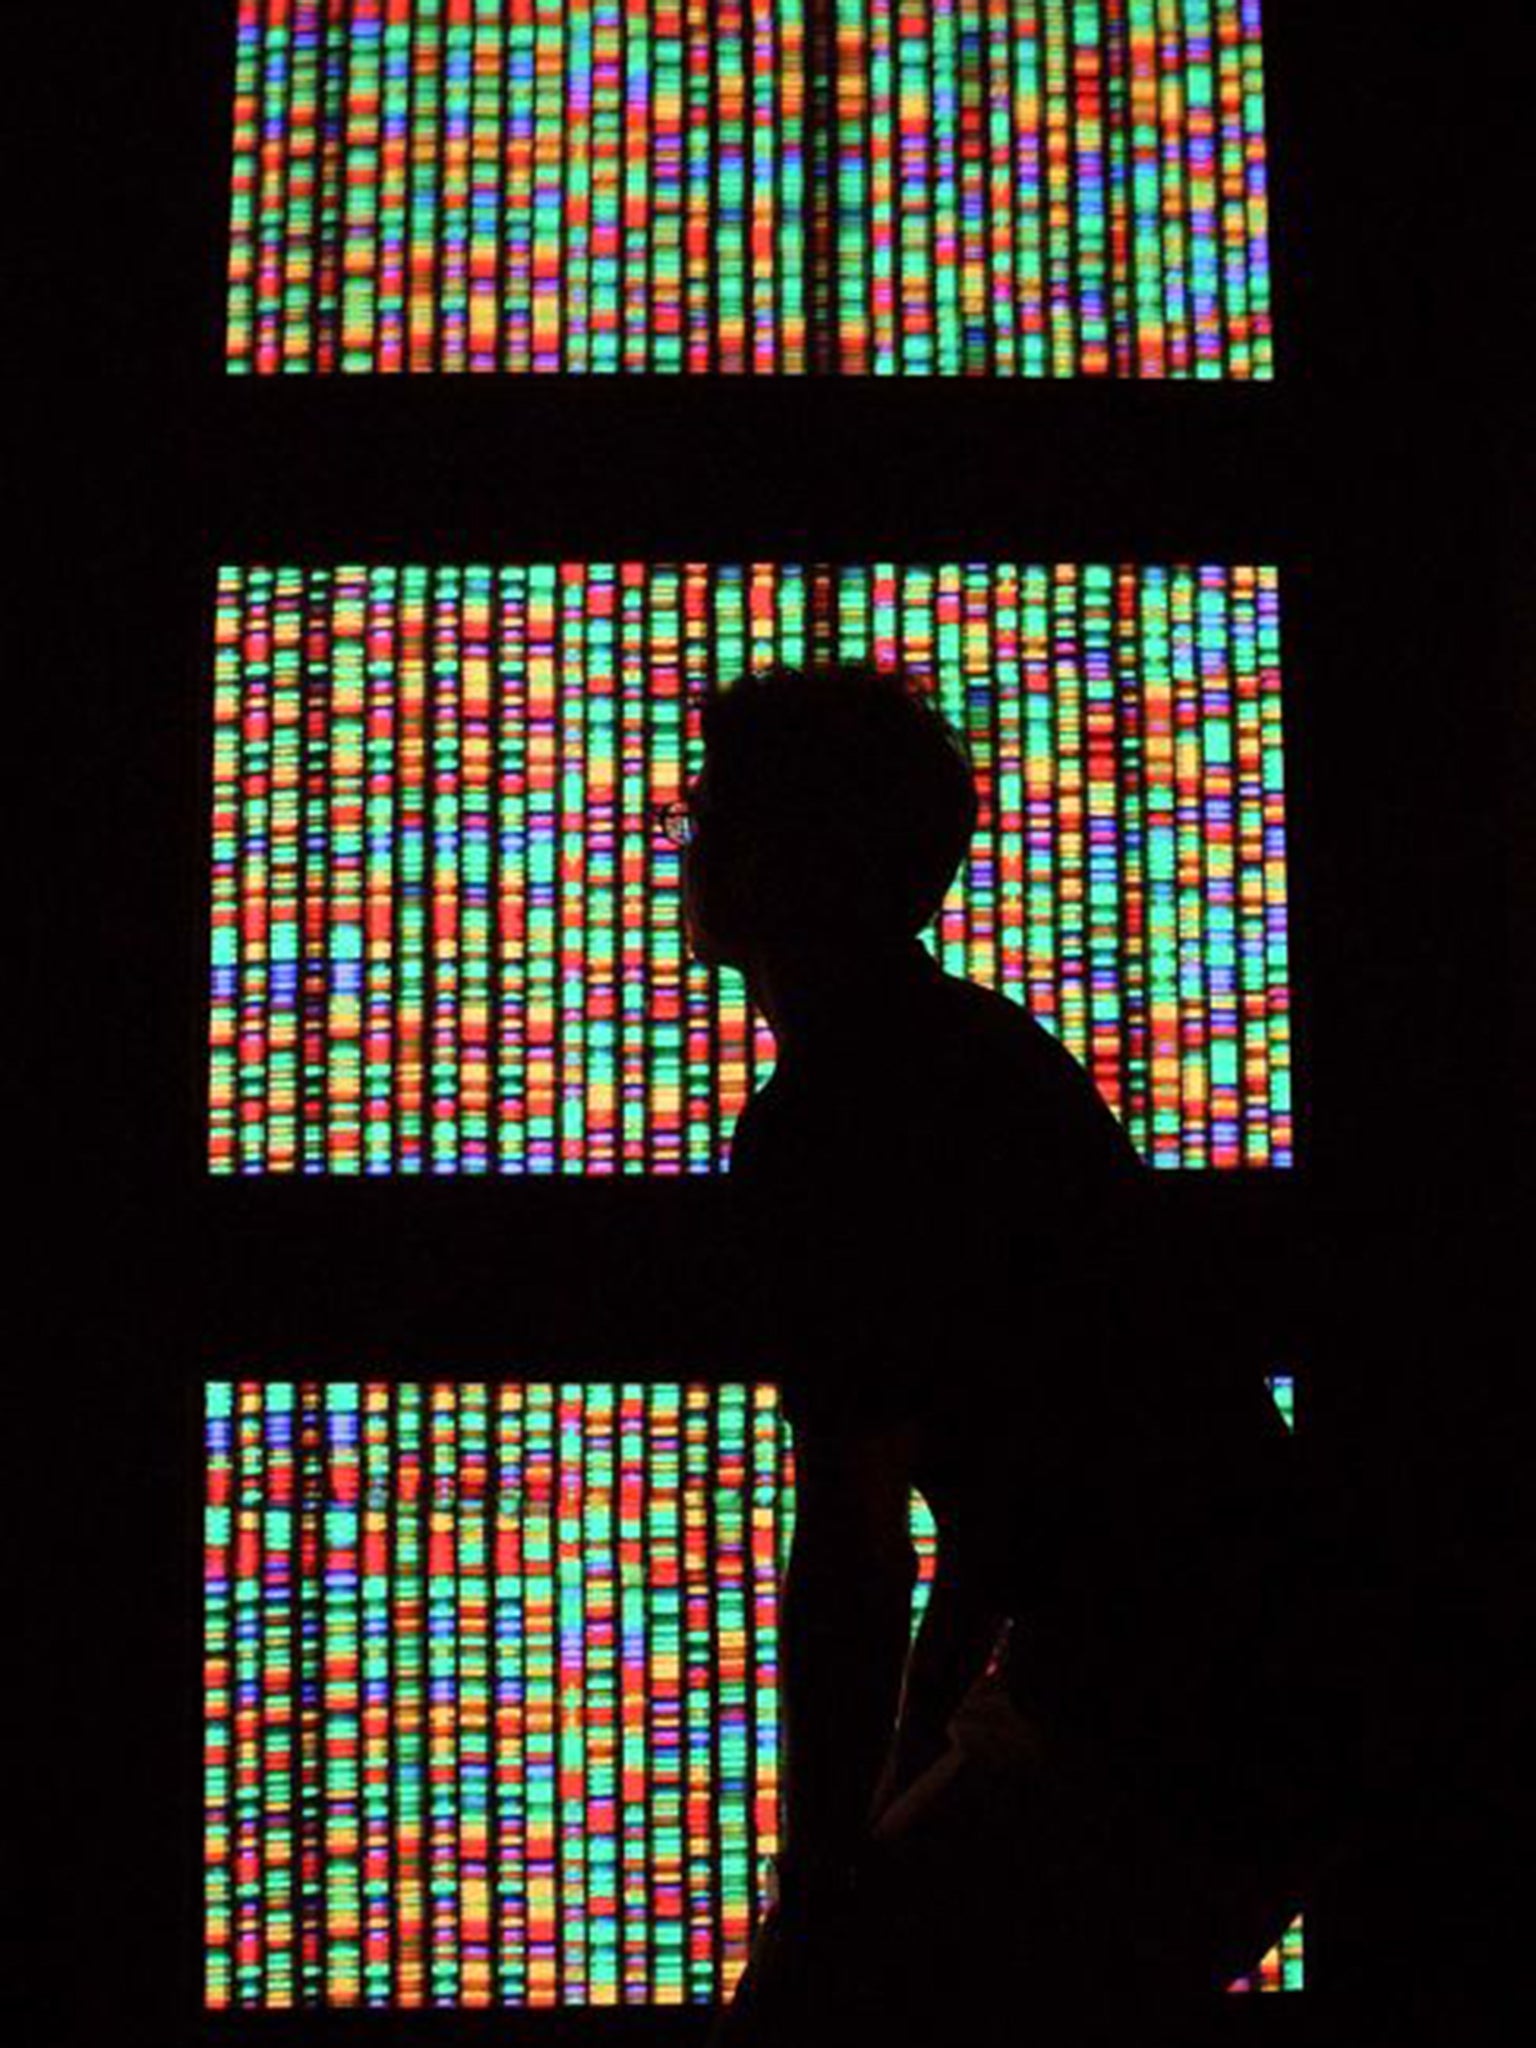 &#13;
Digital representation of the human genome &#13;